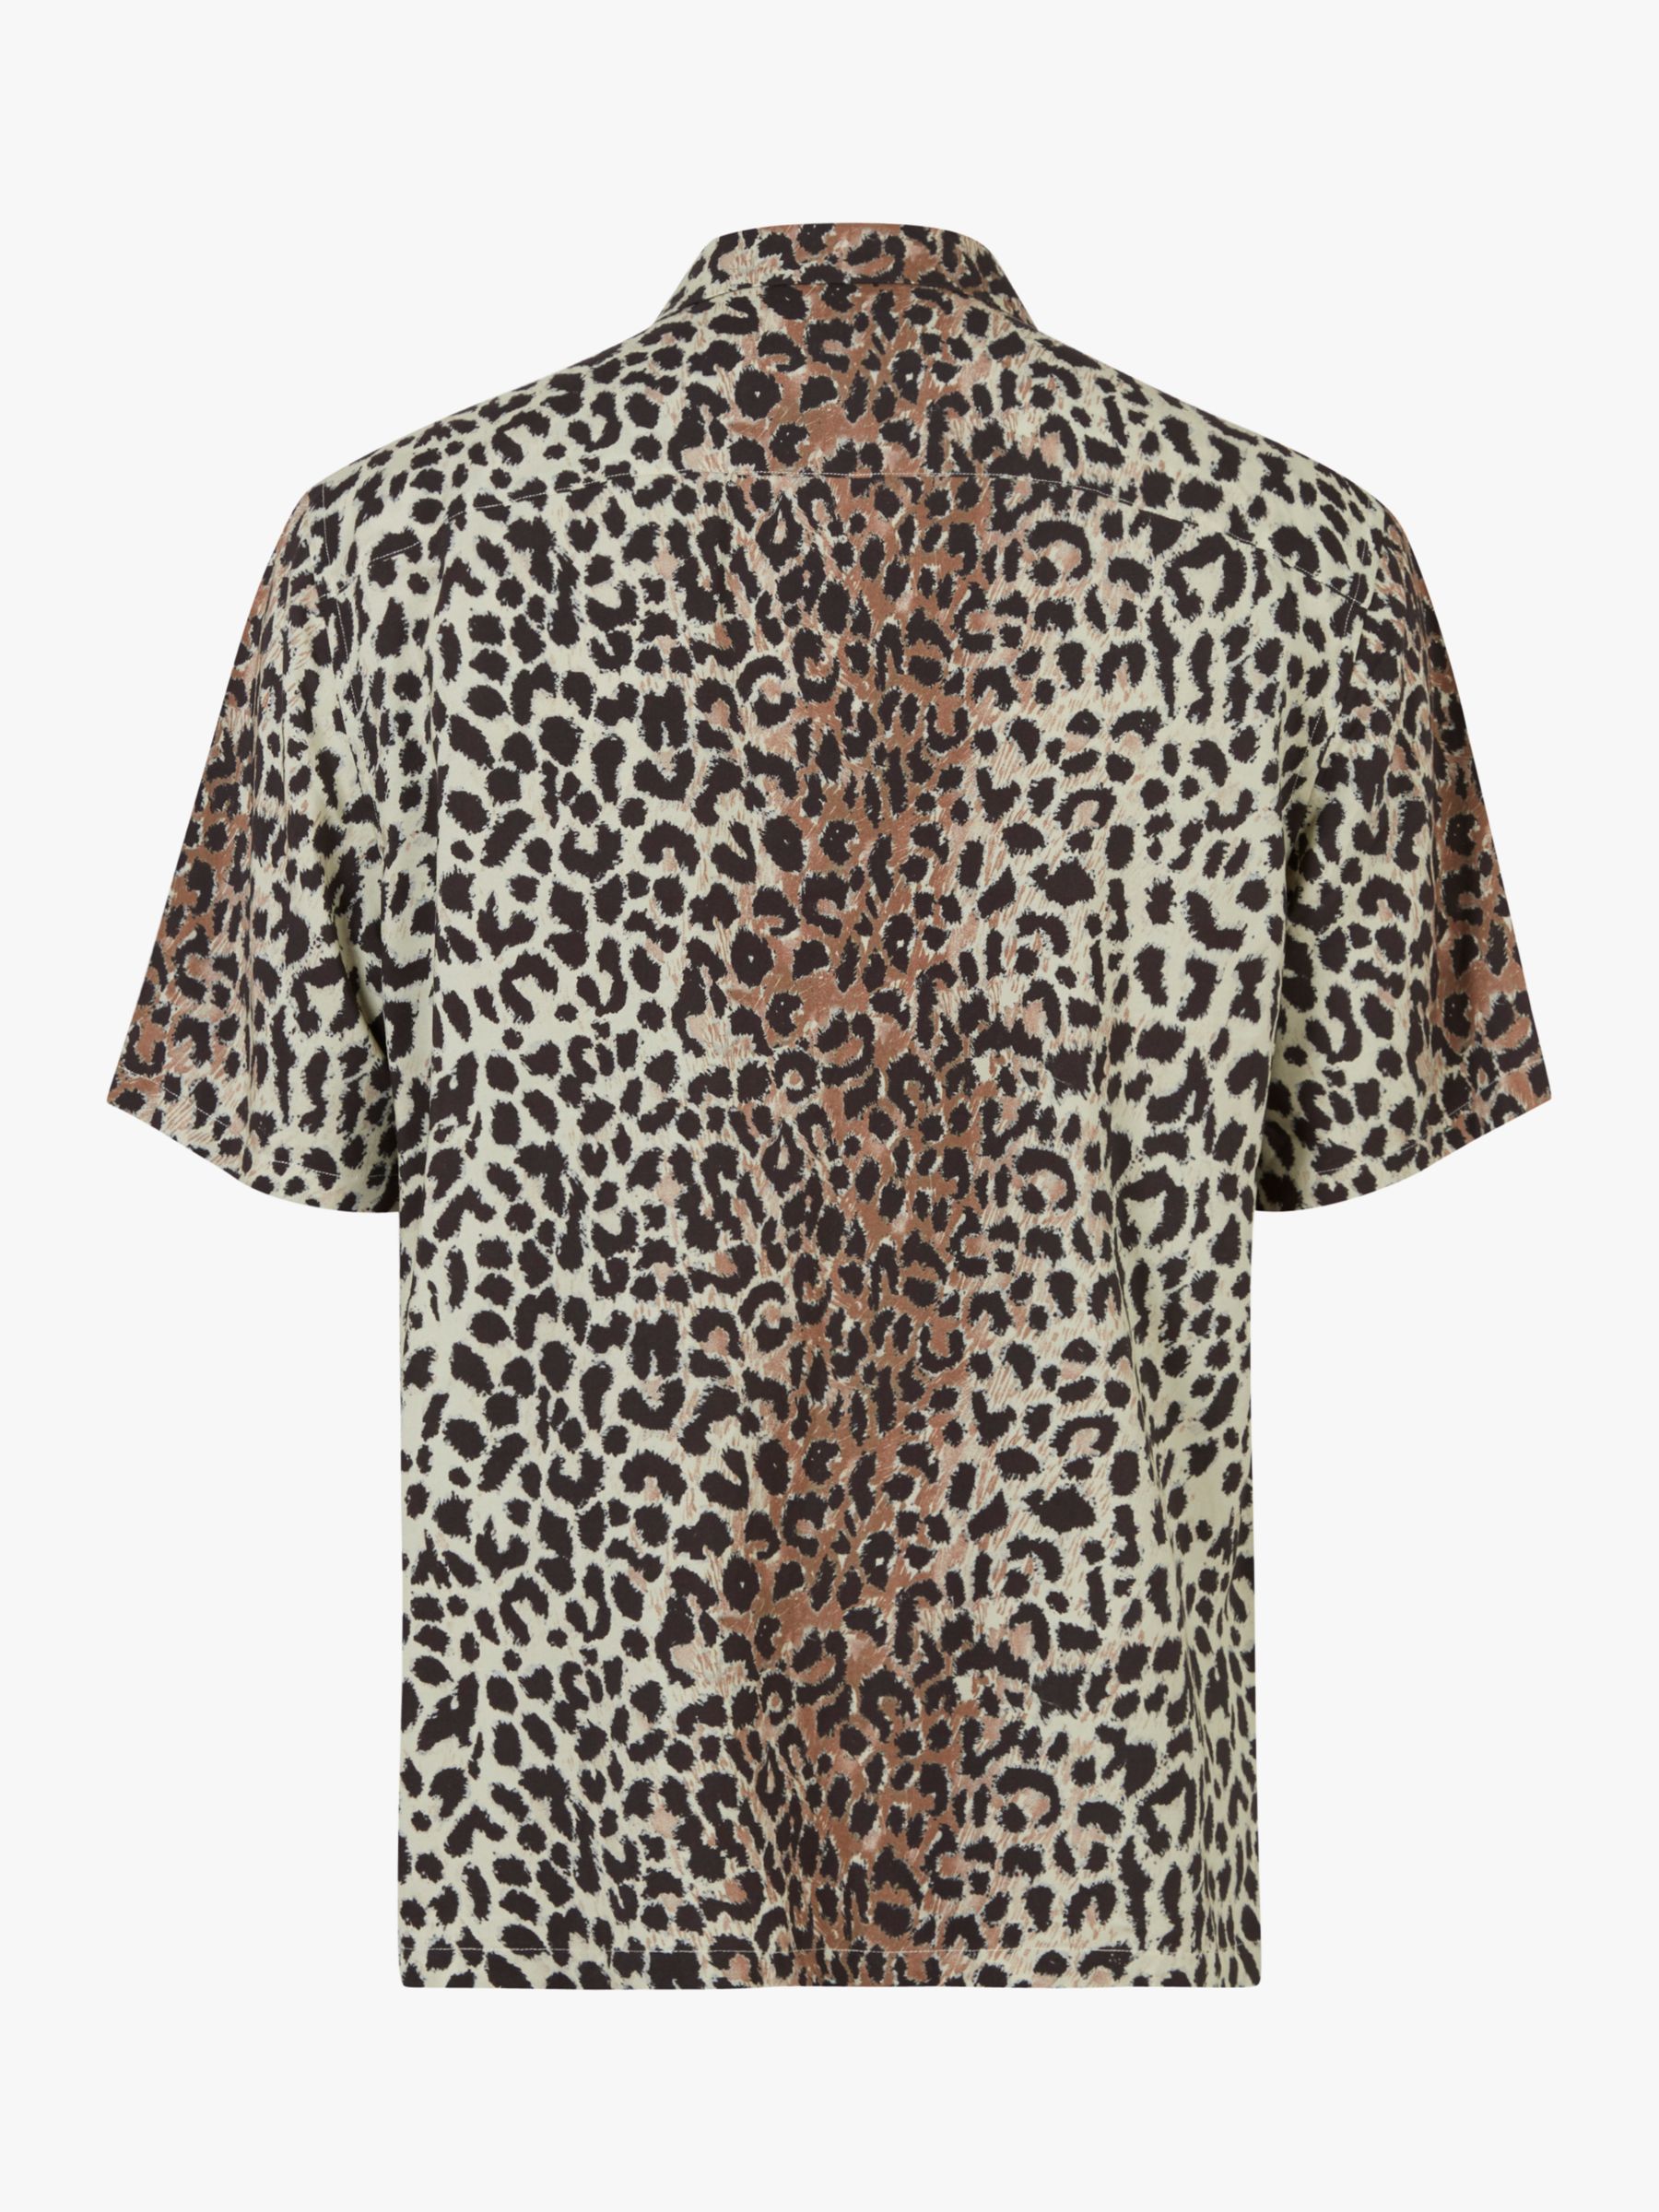 AllSaints Reserve Leopard Relaxed Fit Shirt, Ecru at John Lewis & Partners